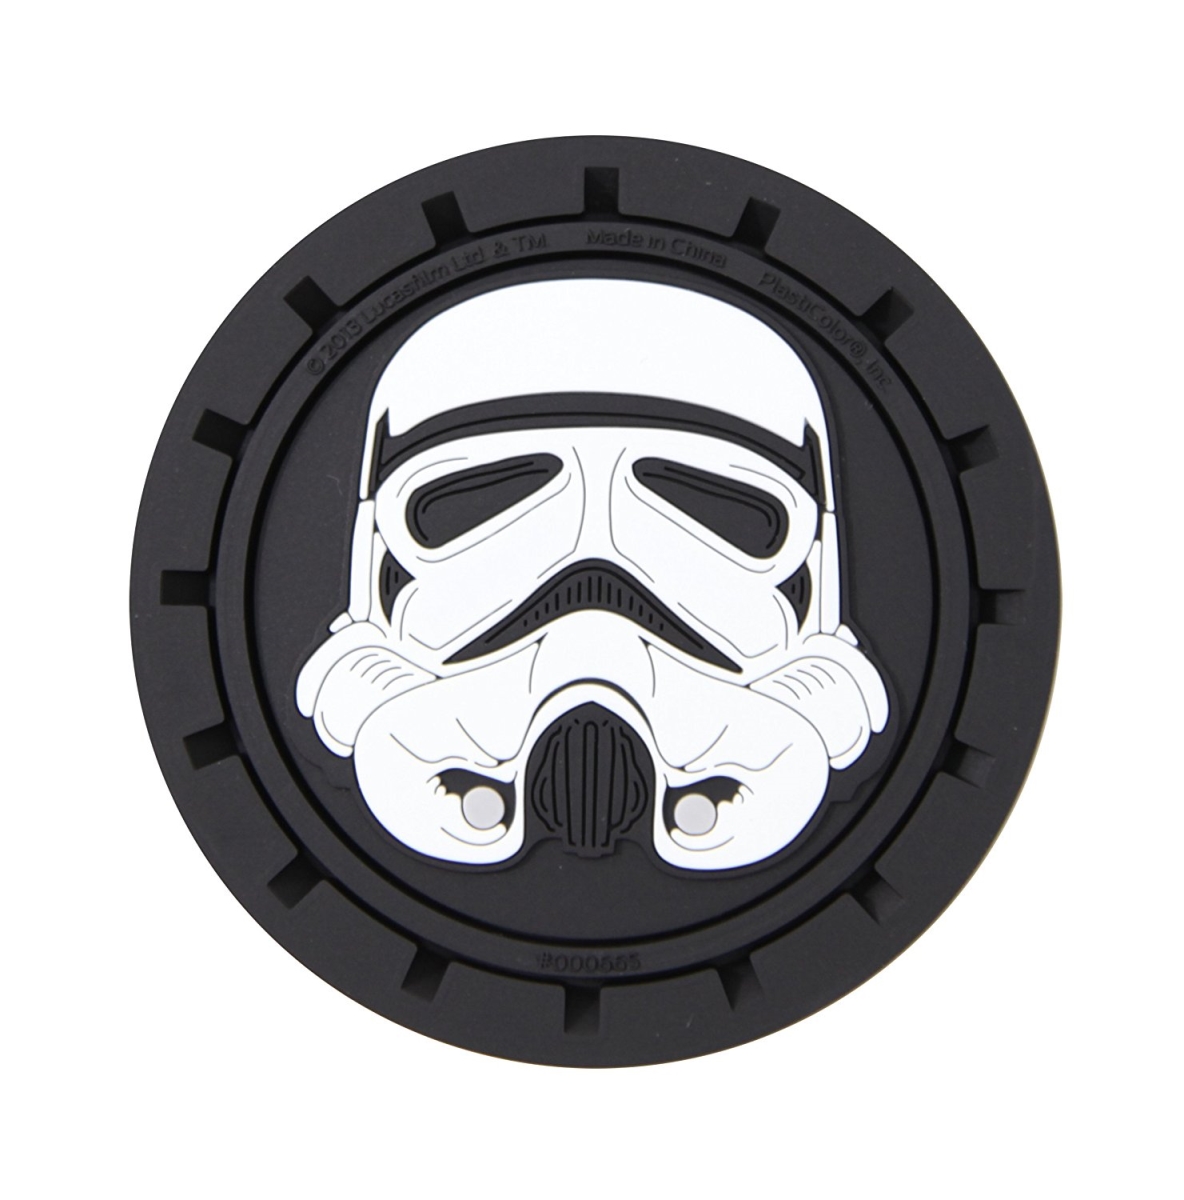 P23-000665r01 Star Wars Stormtrooper Cup Holder Coaster